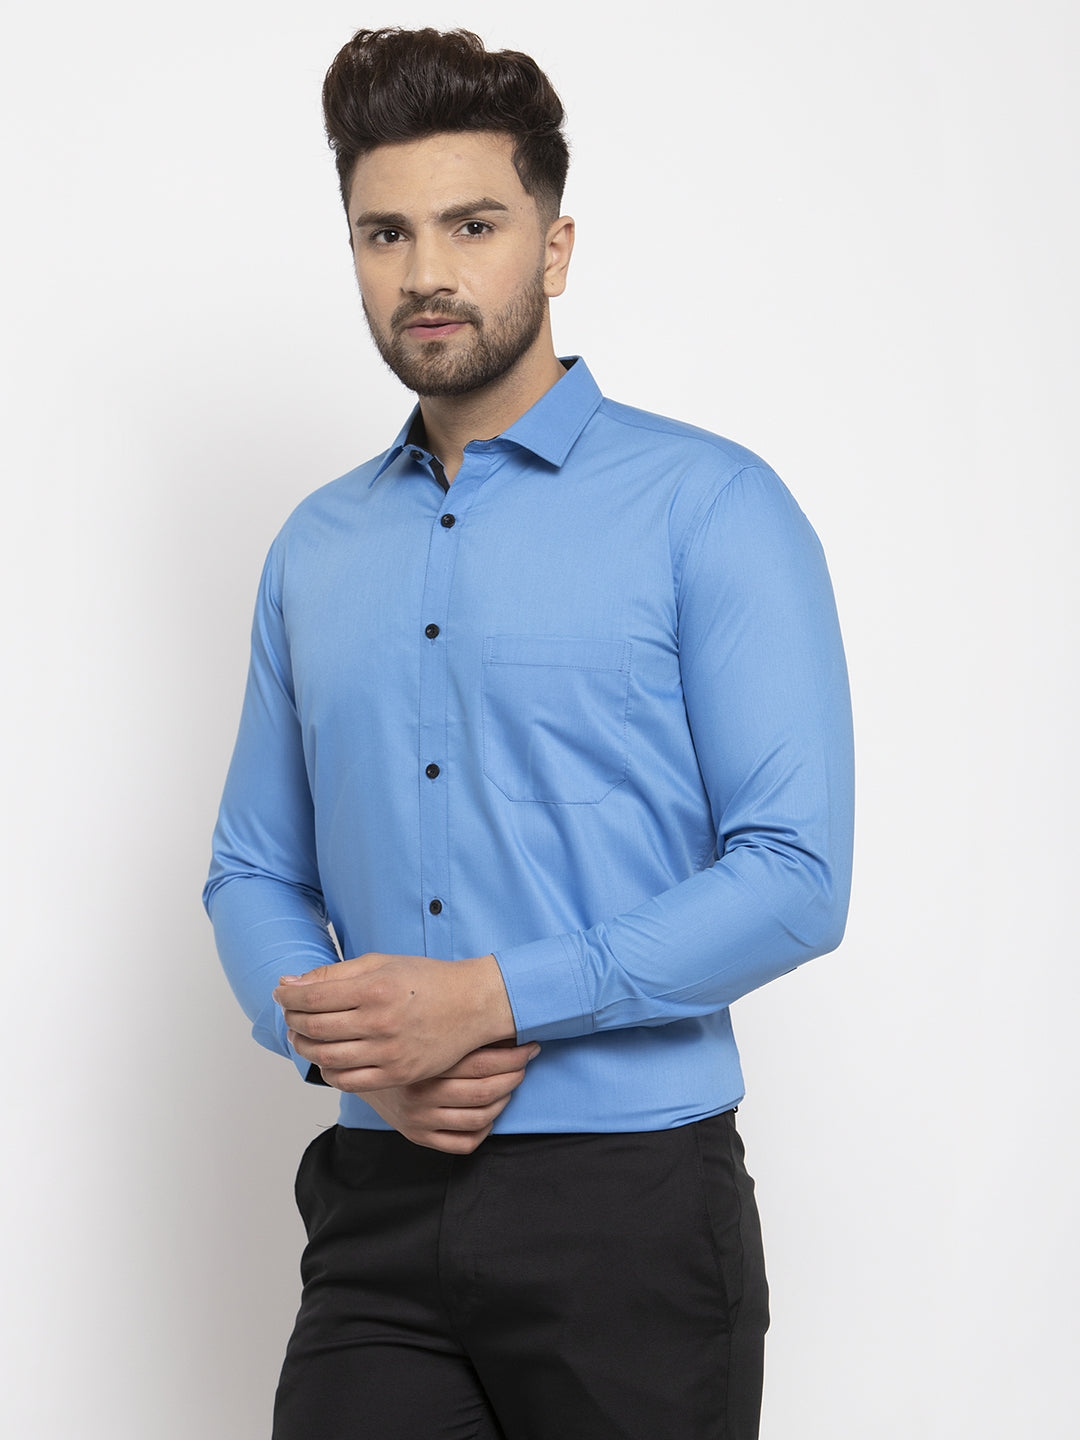 Men's Light Blue Formal Shirt with black detailing ( SF 411Light-Blue ) - Jainish